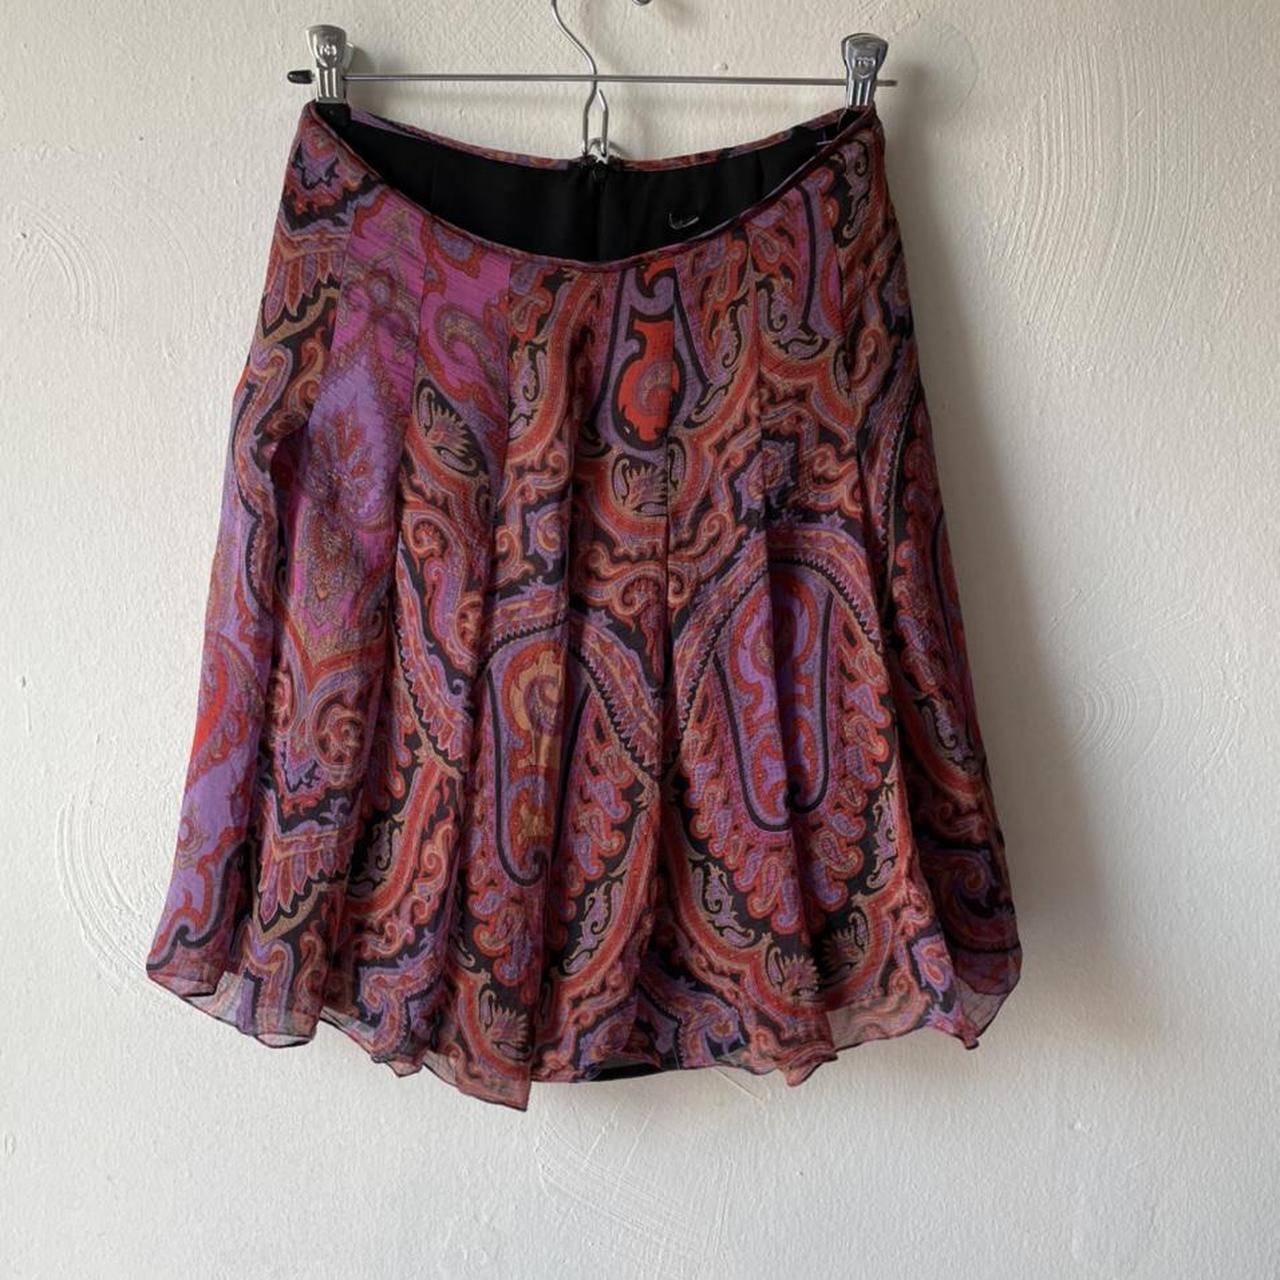 Anna Sui Women's Orange and Burgundy Skirt